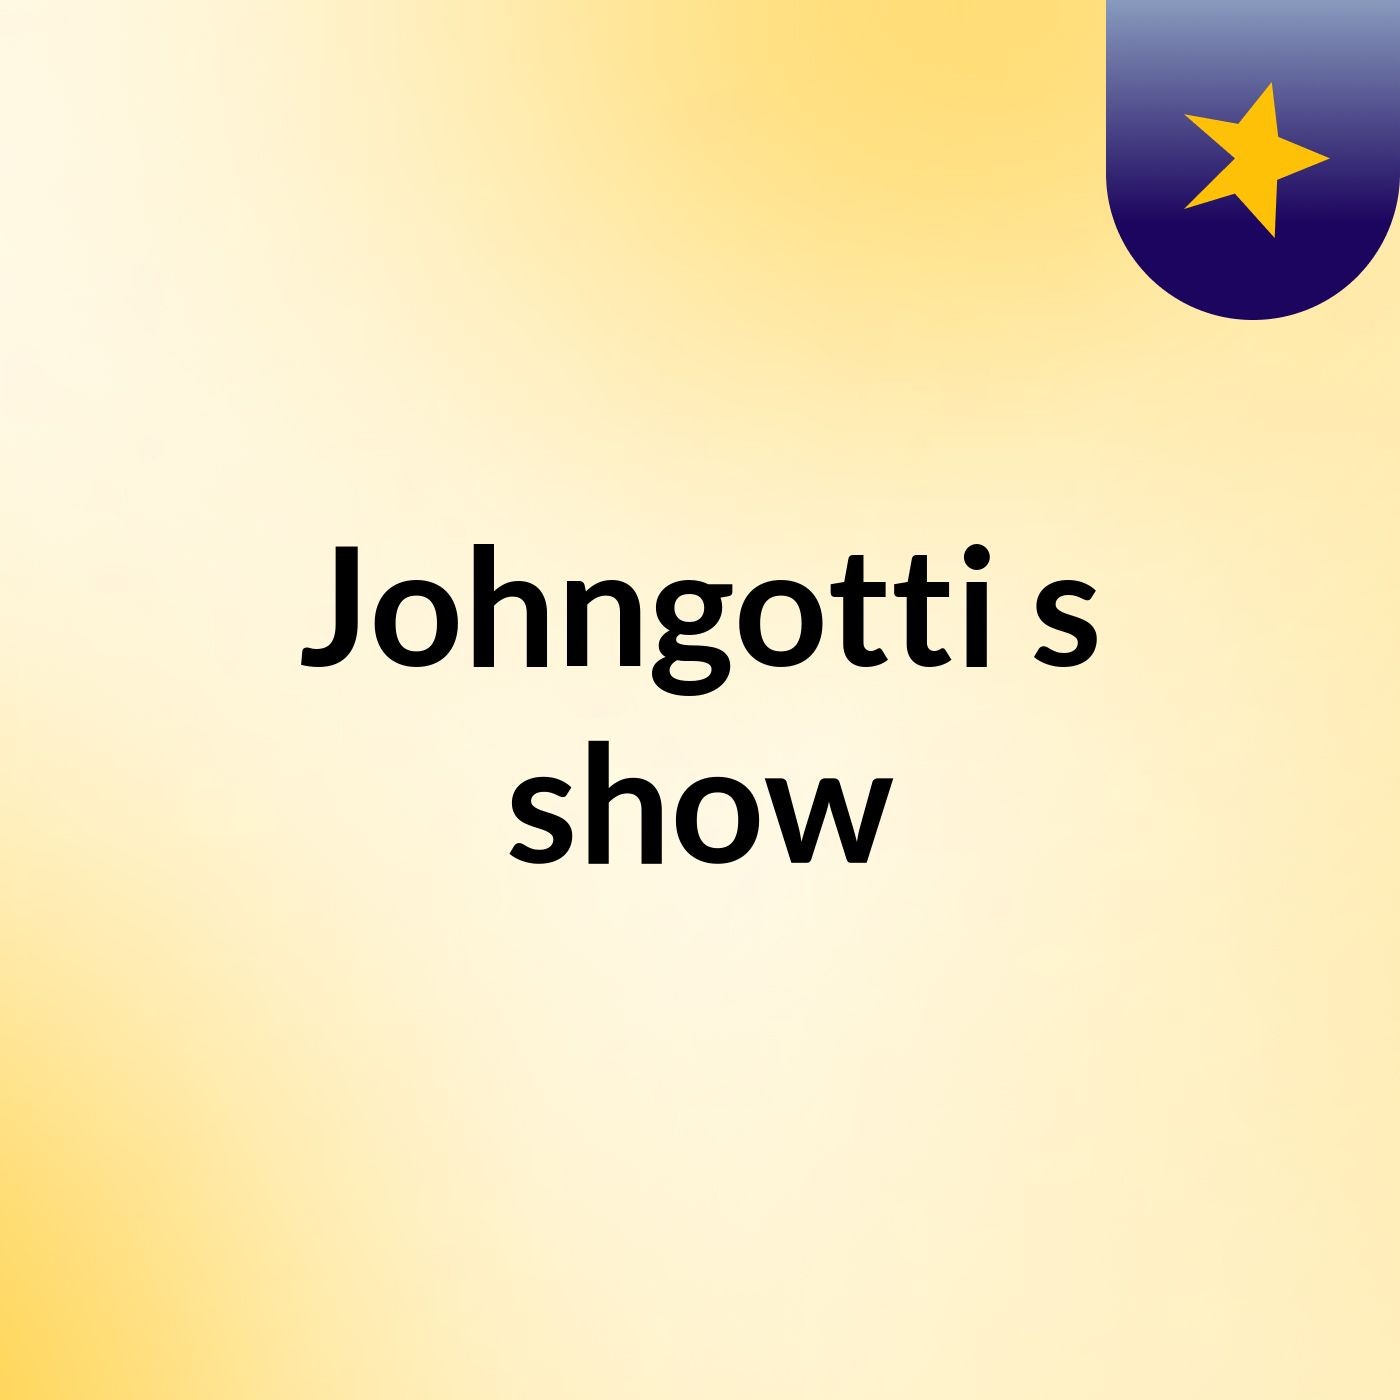 Johngotti's show